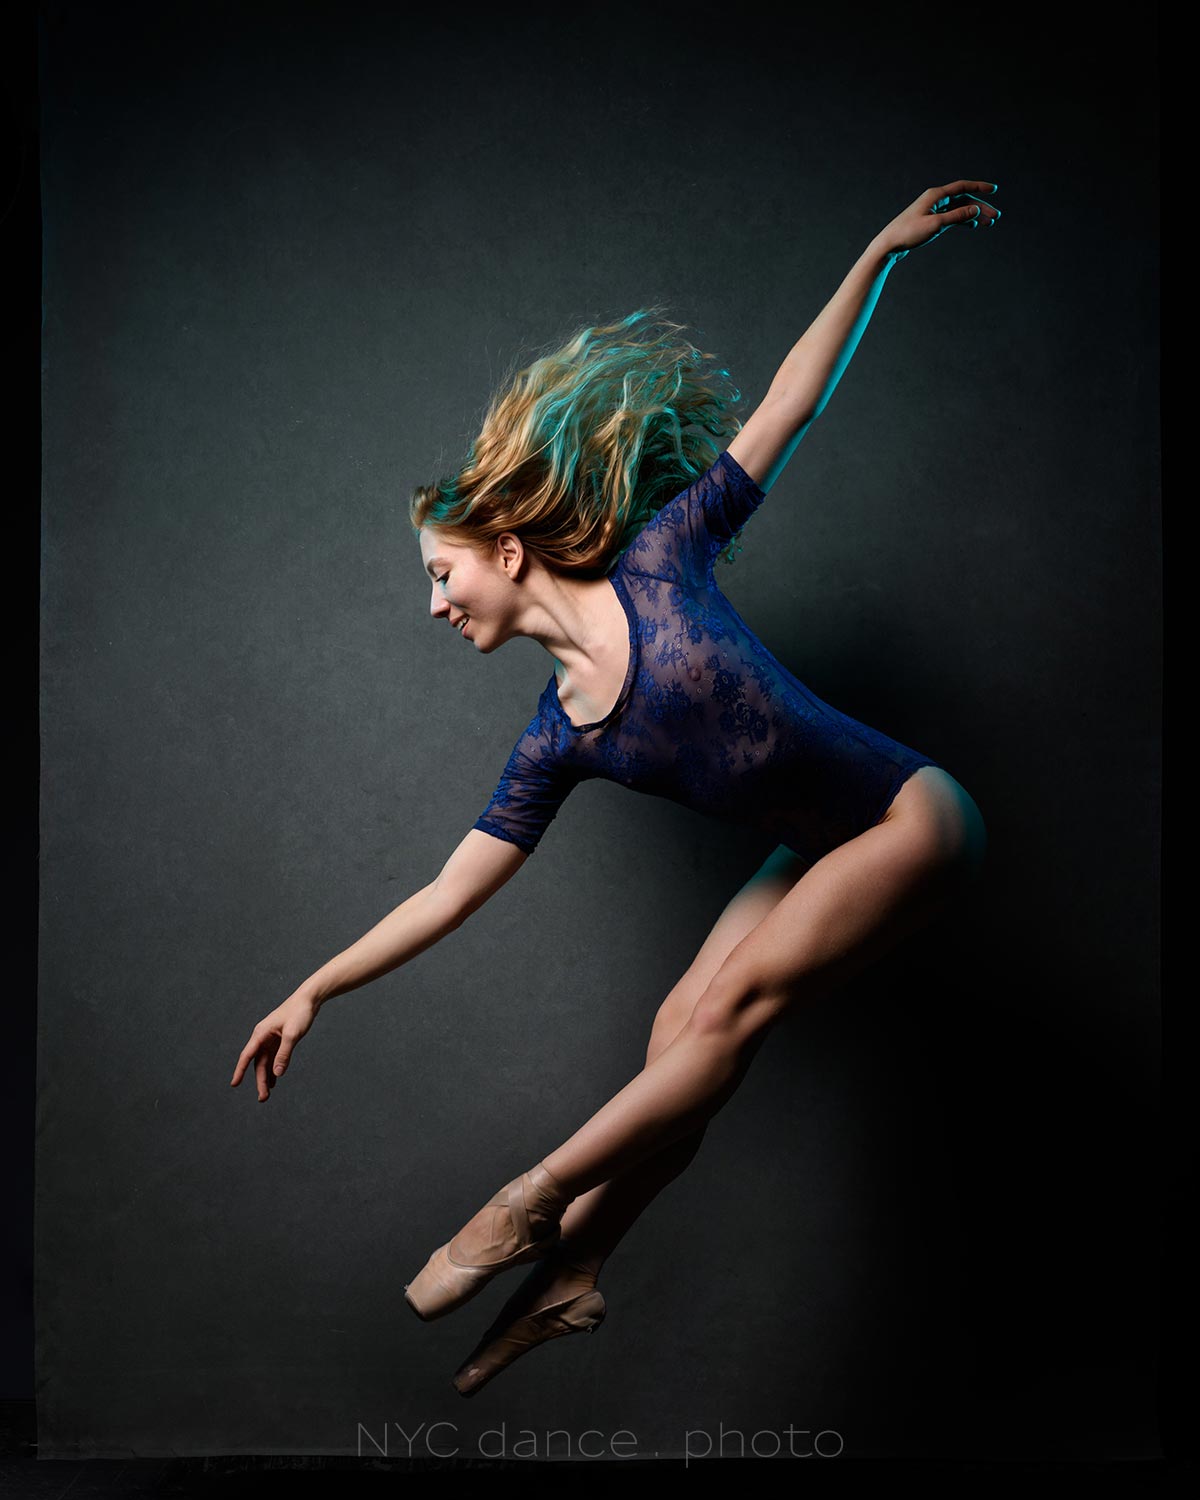 Eli Akerstein: Beauty in Dance Photography